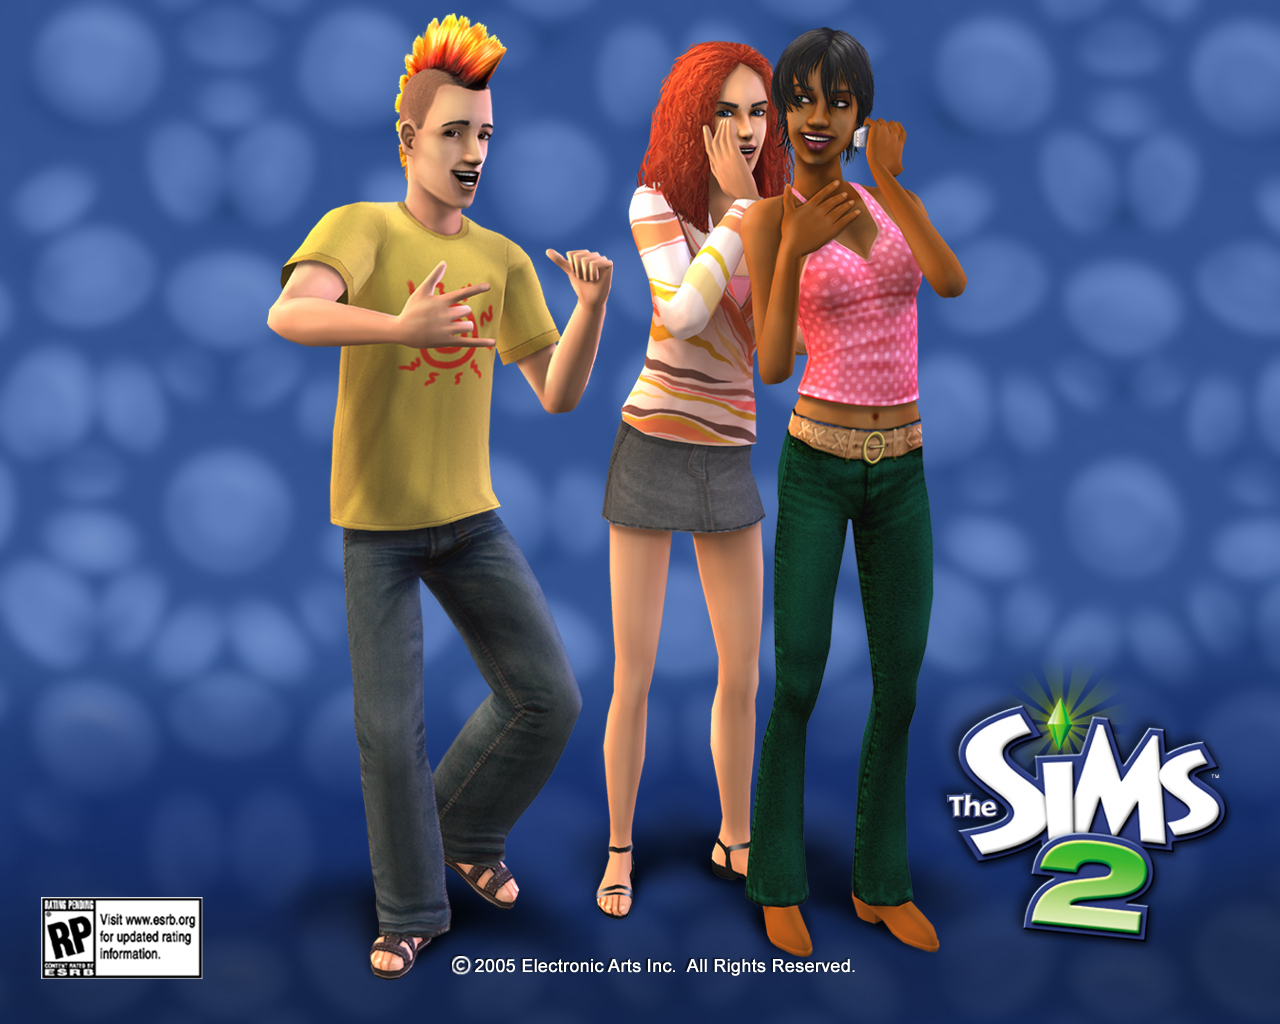 sims 2 - The Sims 2 Wallpaper (3274092) - Fanpop